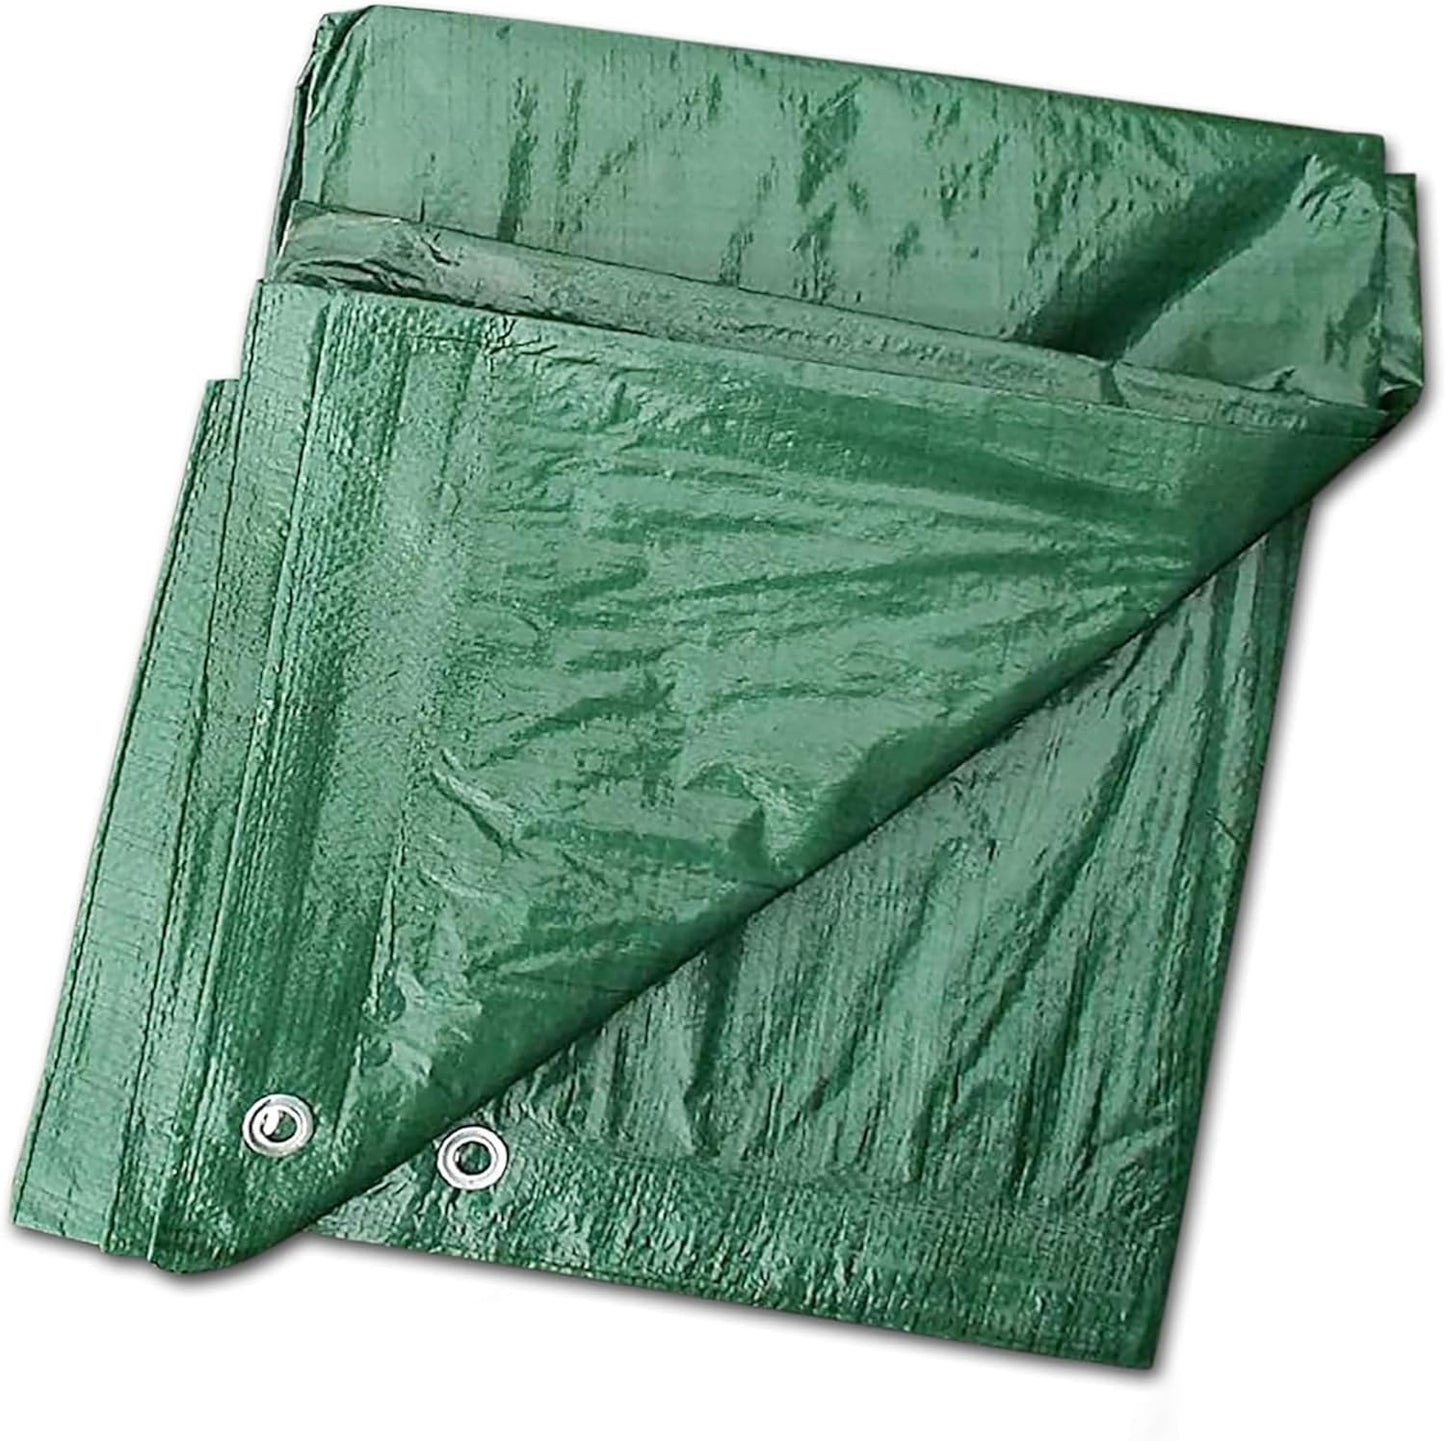 Green Tarpaulin – Heavy Duty, Waterproof Cover – Durable Sheet for Garden, Trailer, Caravan, Camping, Home, Outdoor